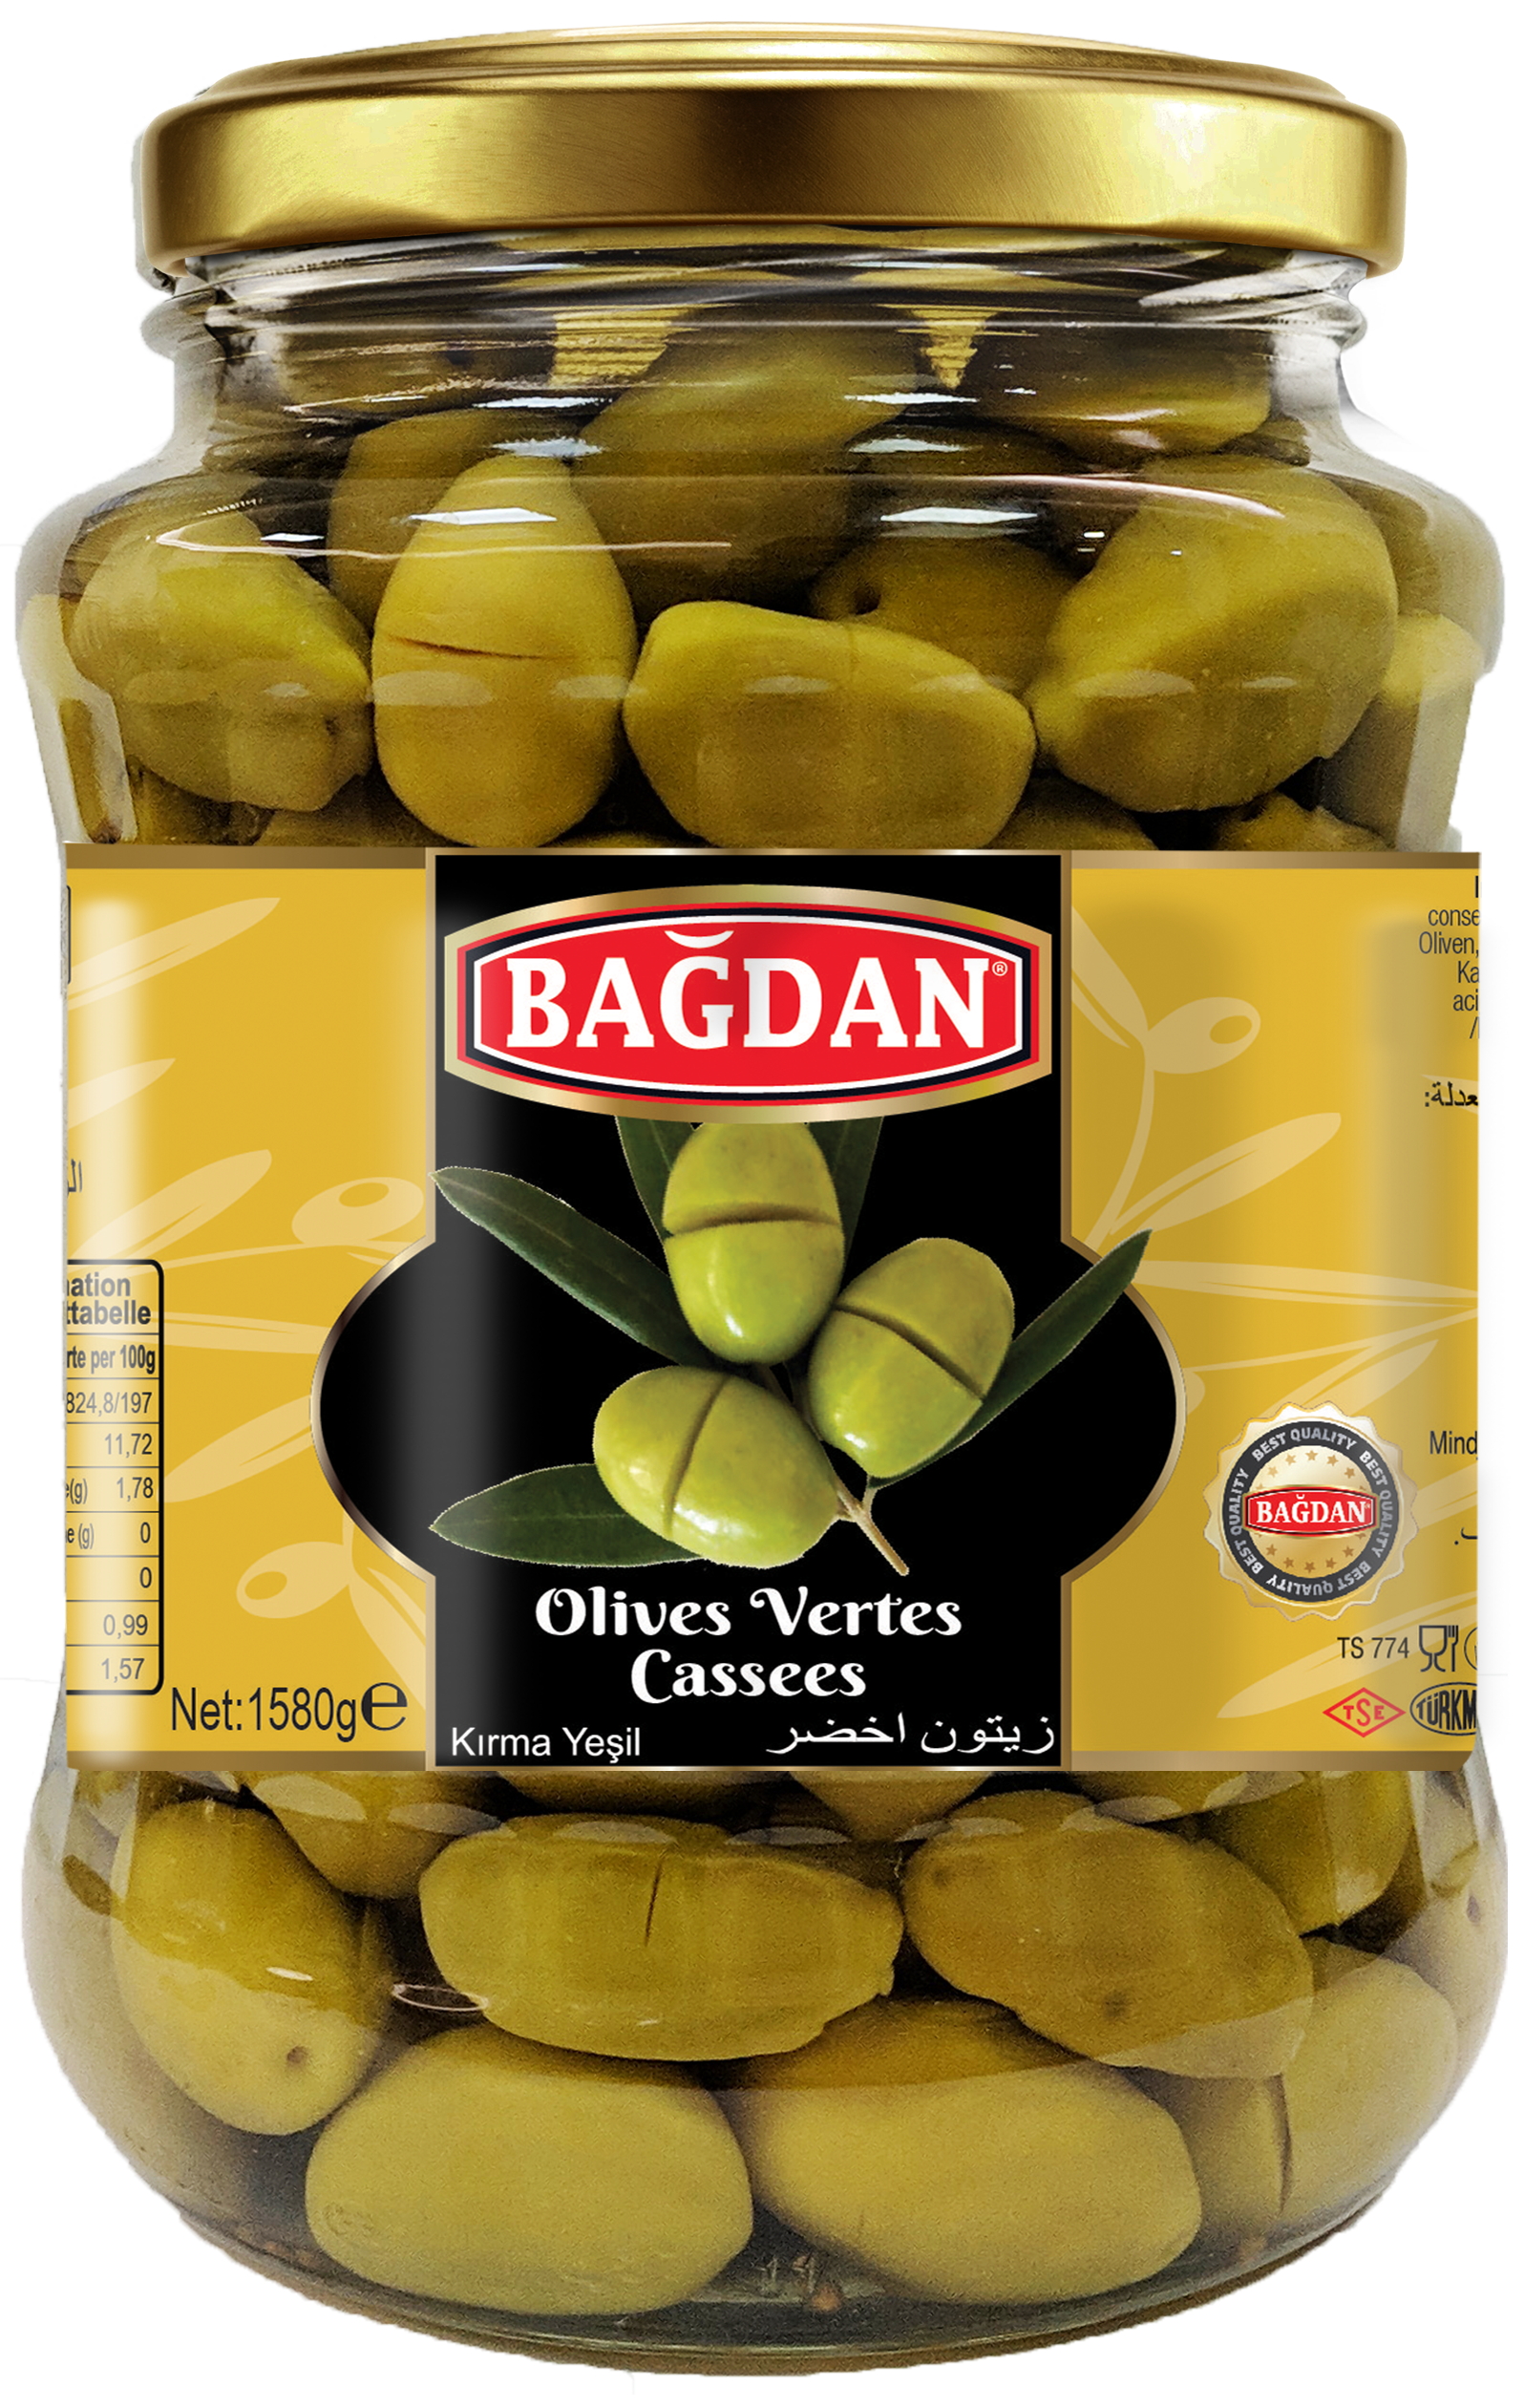 BAGDAN CAM YESIL ZEYTIN KIRMA 1580G (olives vertes concassées)